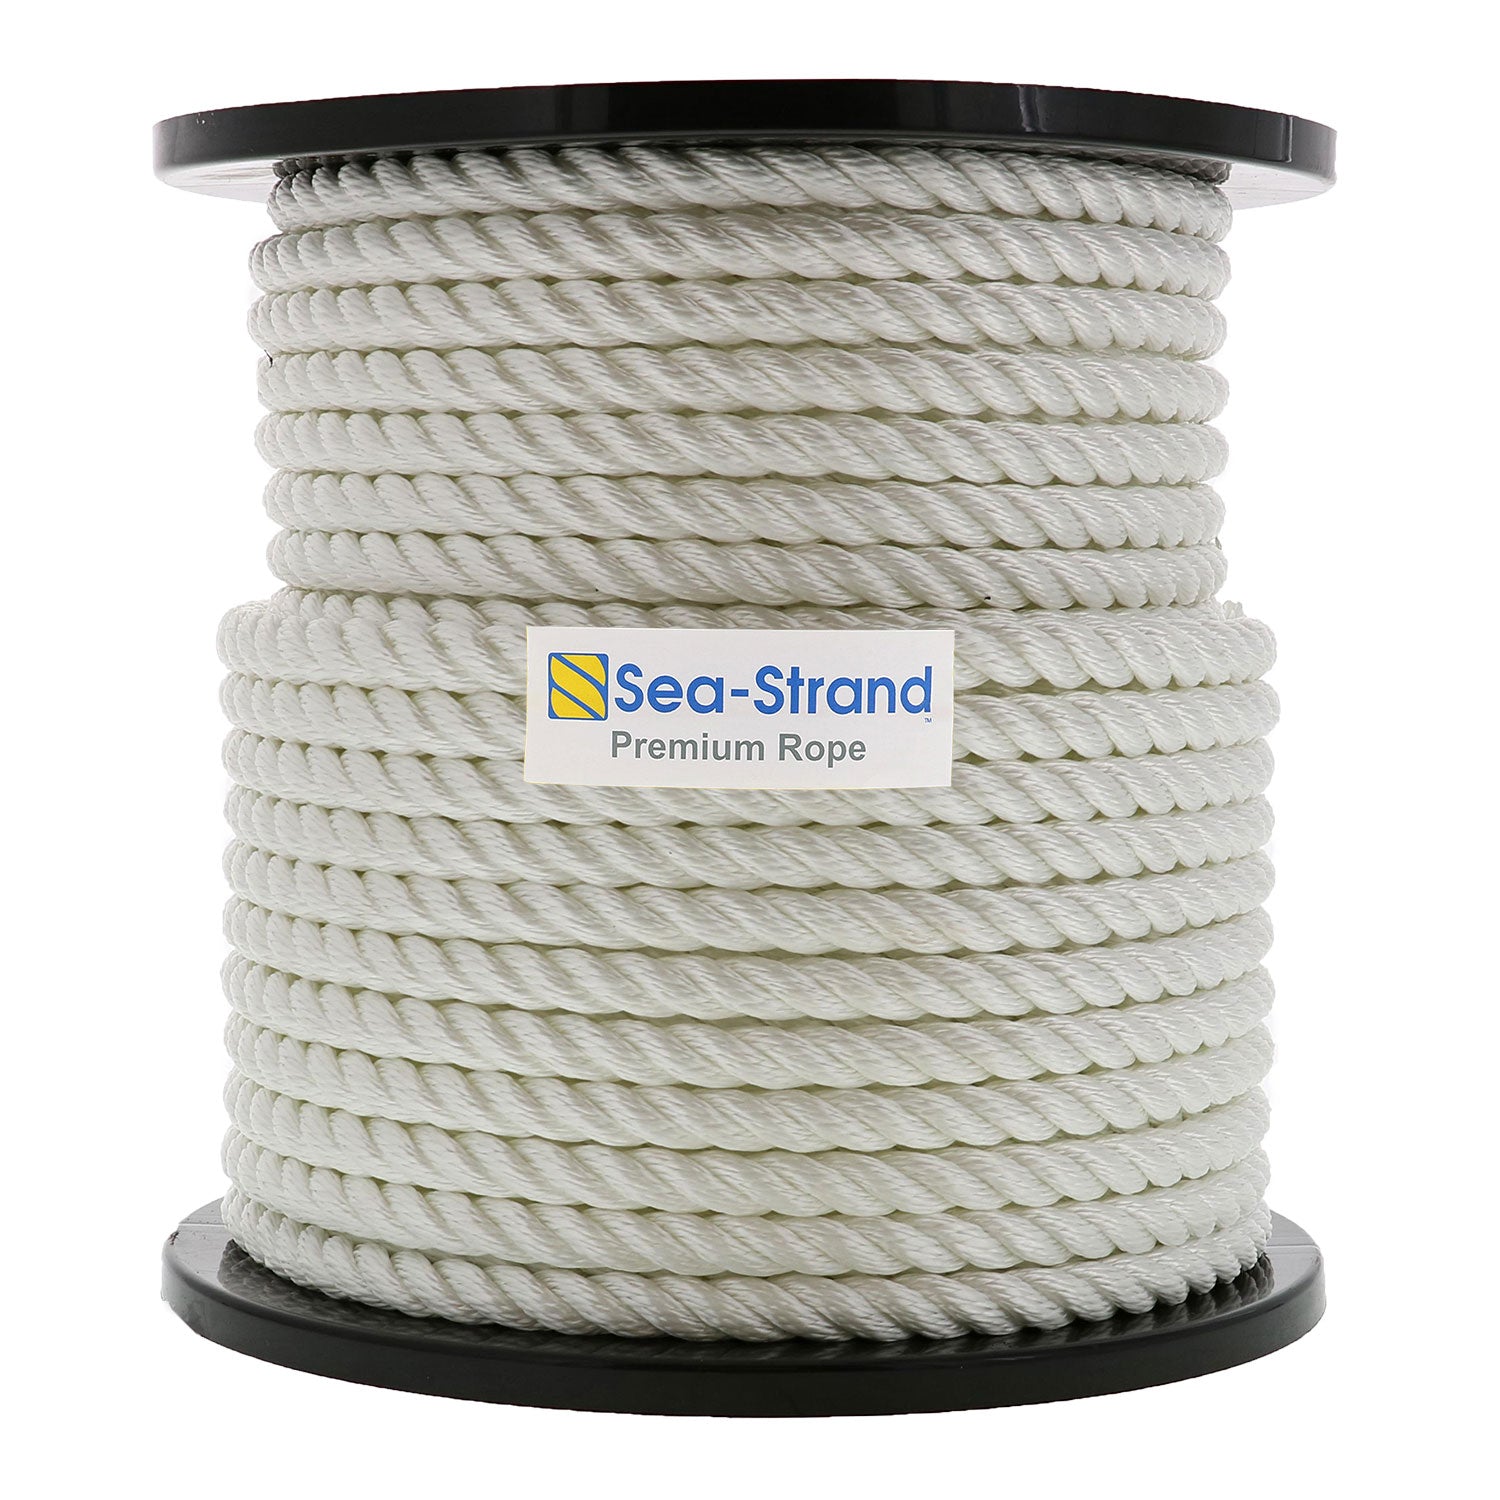 1 x 300' Reel, 3-Strand Nylon Rope